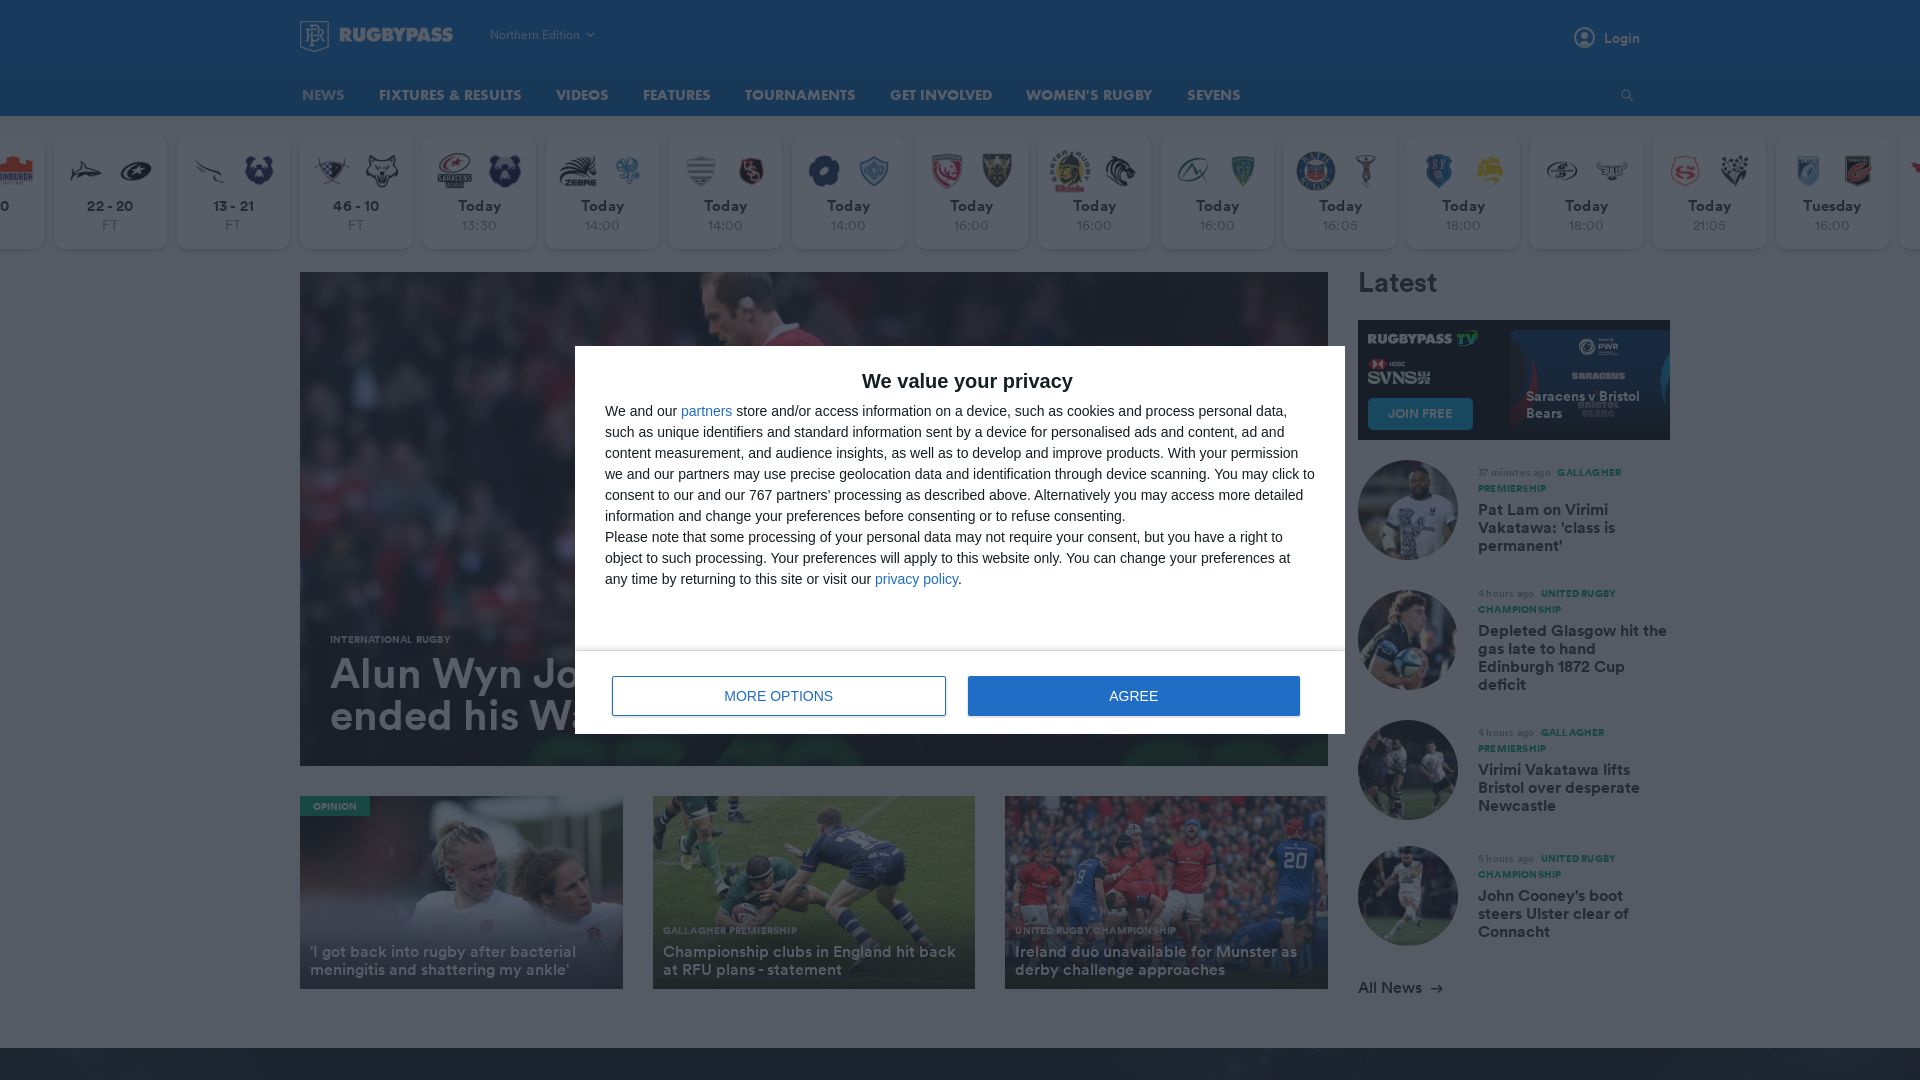 Website status rugbypass.com is   ONLINE